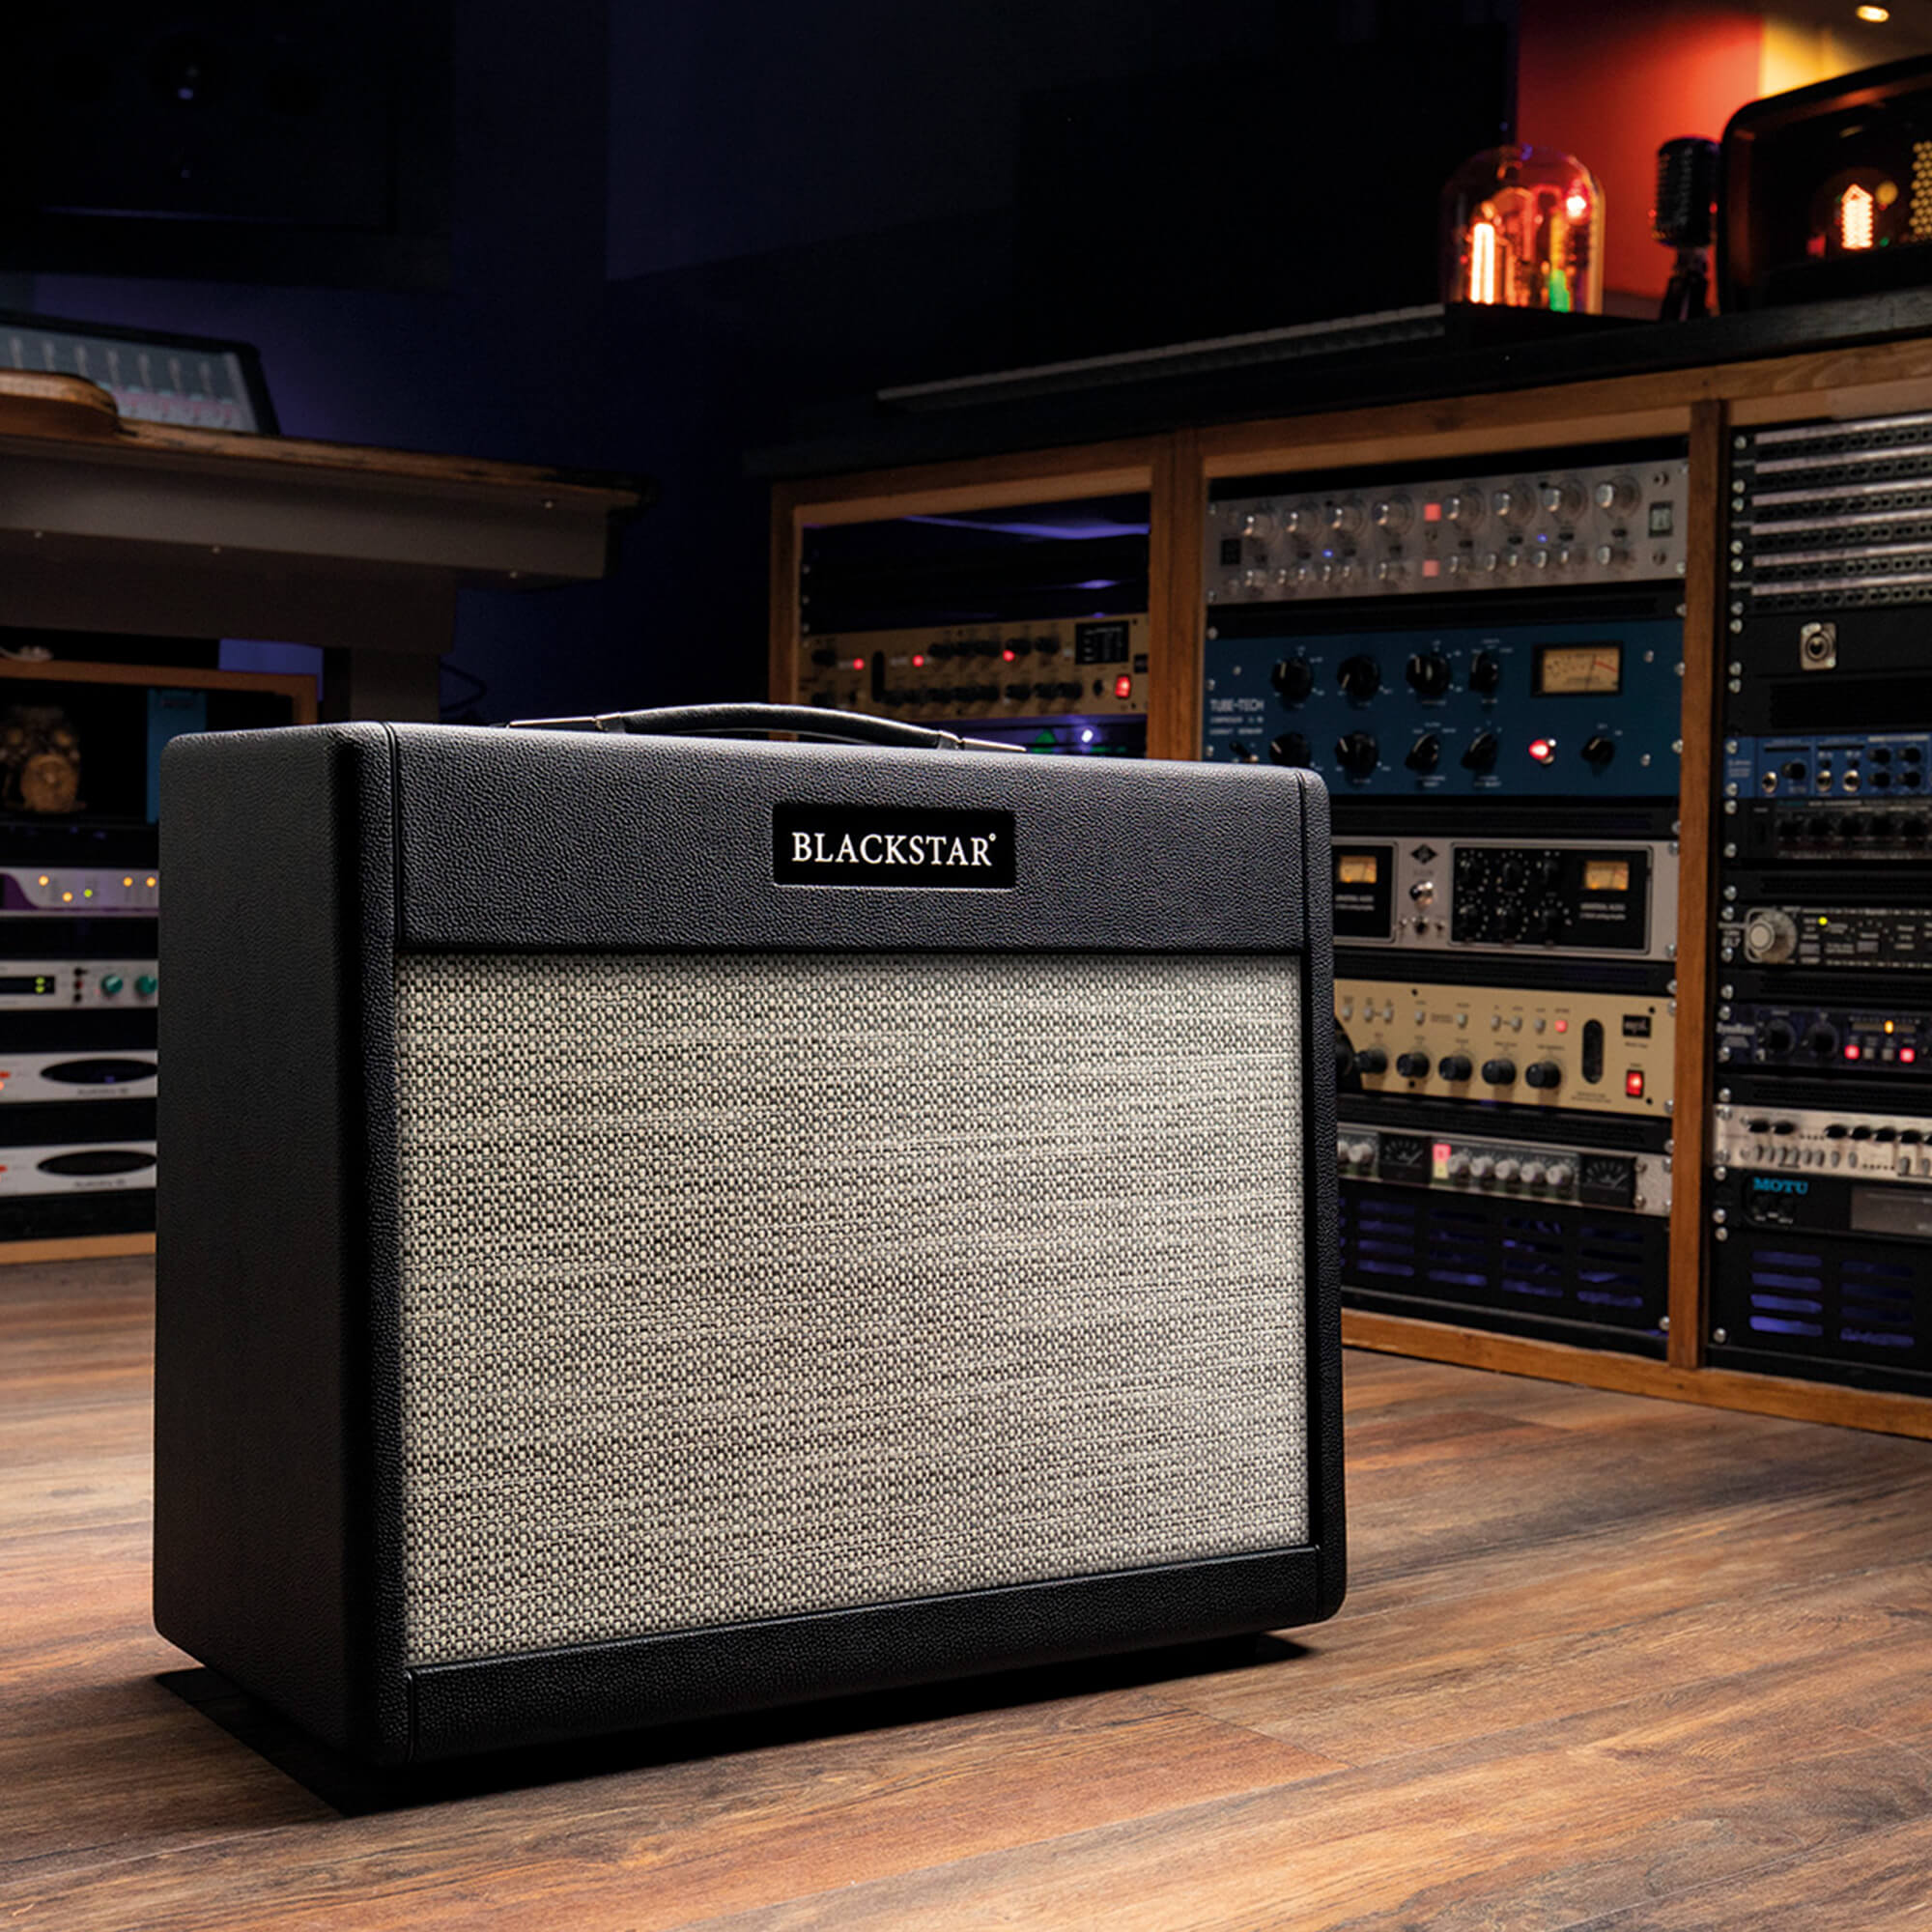 Blackstar Amps St. James 50 6L6 Combo guitar amplifier in recording studio